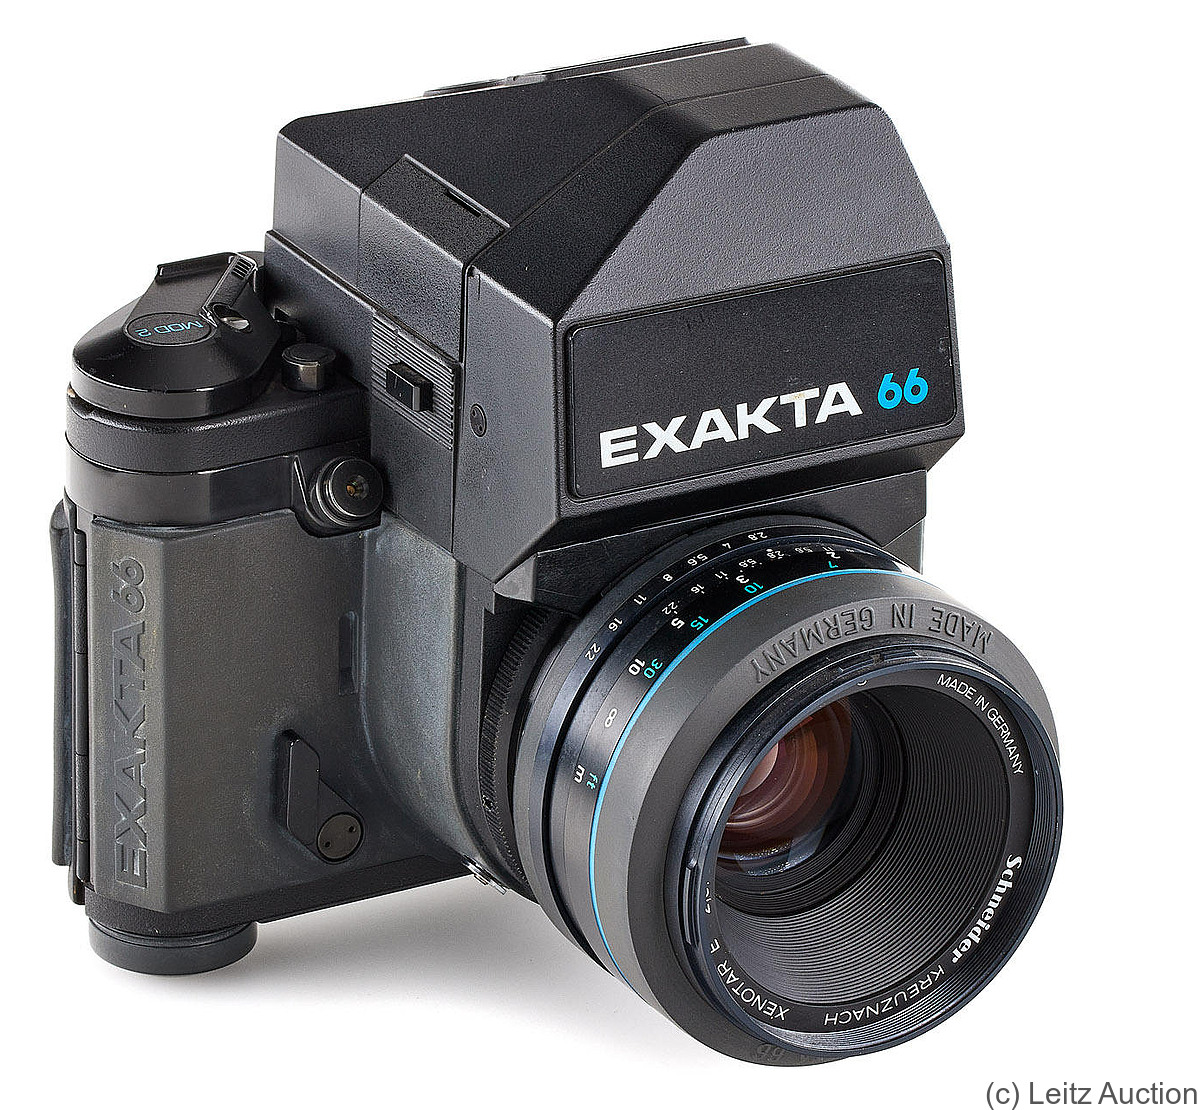 Ihagee Westberlin: Exakta 66 (Model II) camera